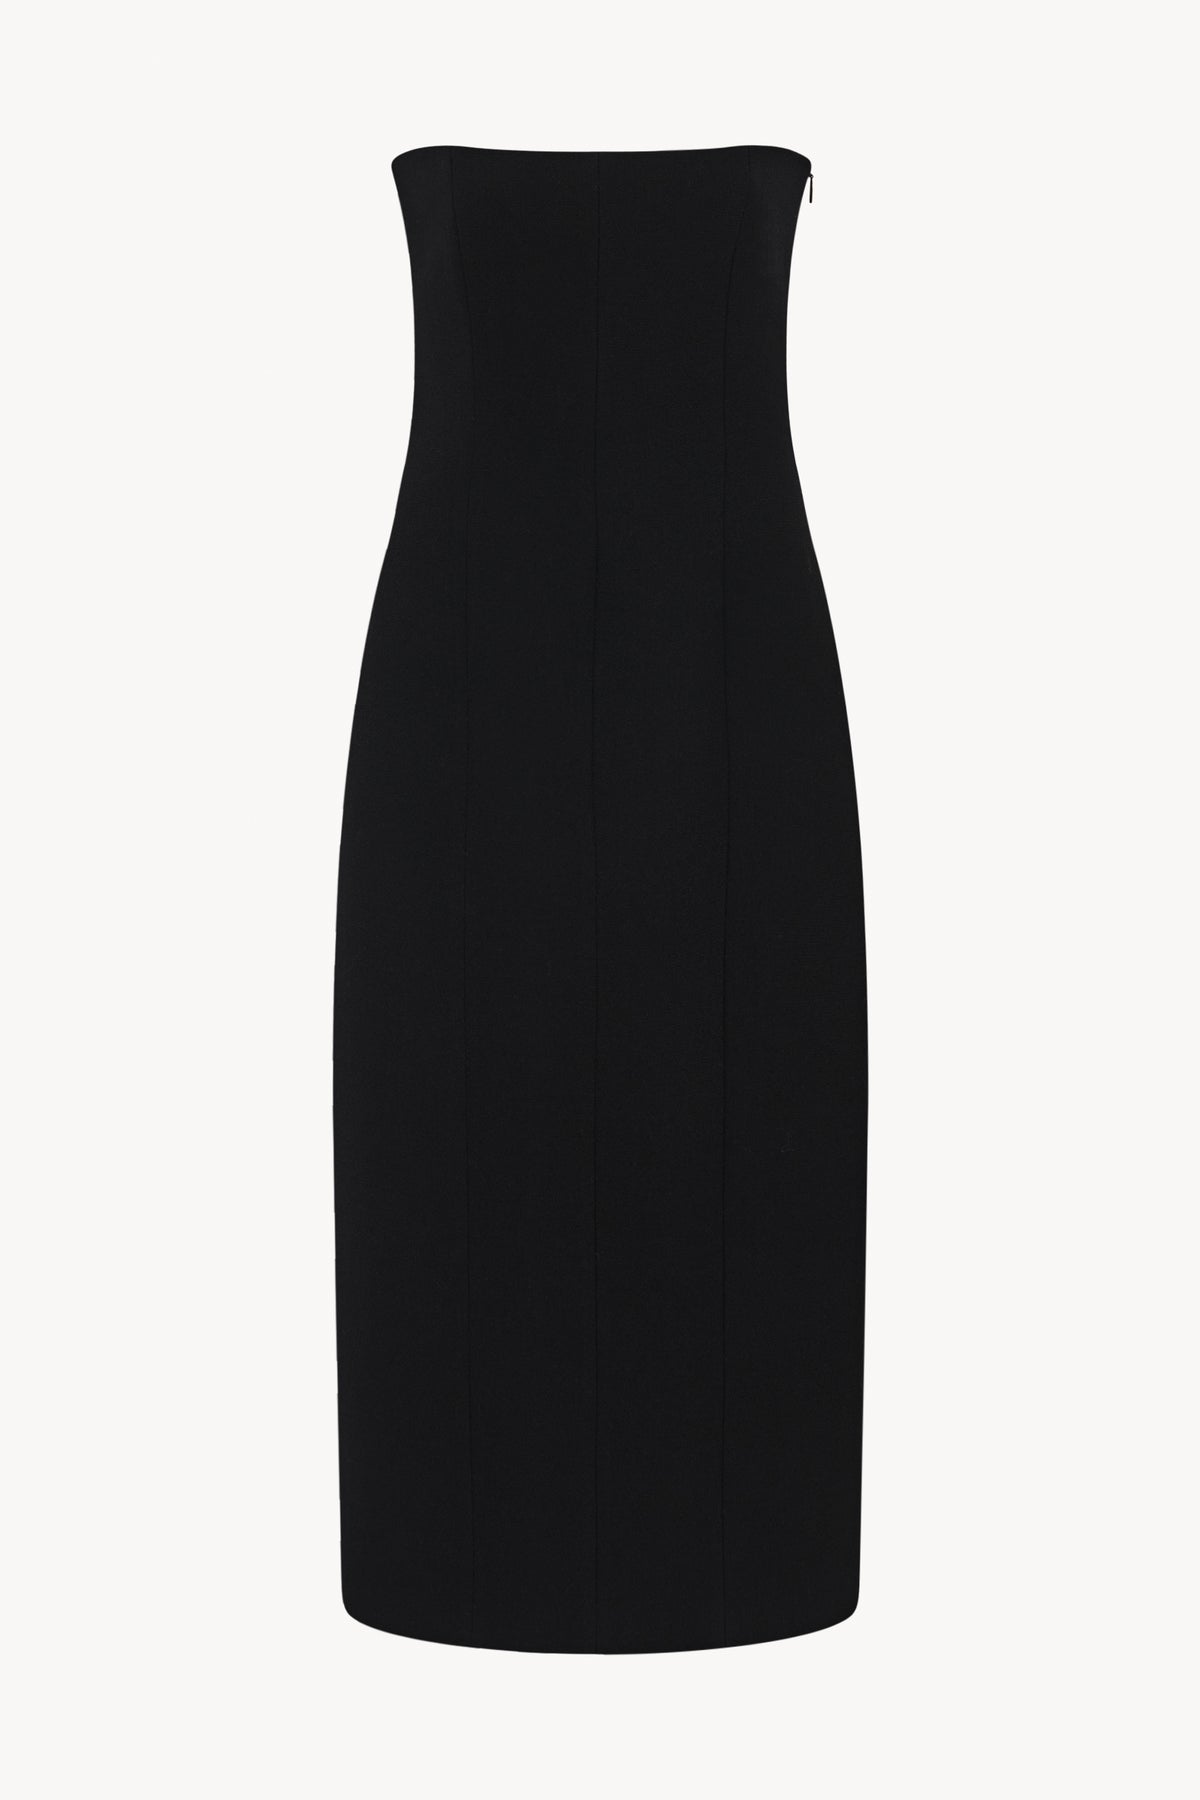 Black Opal sleeveless scuba dress, The Row